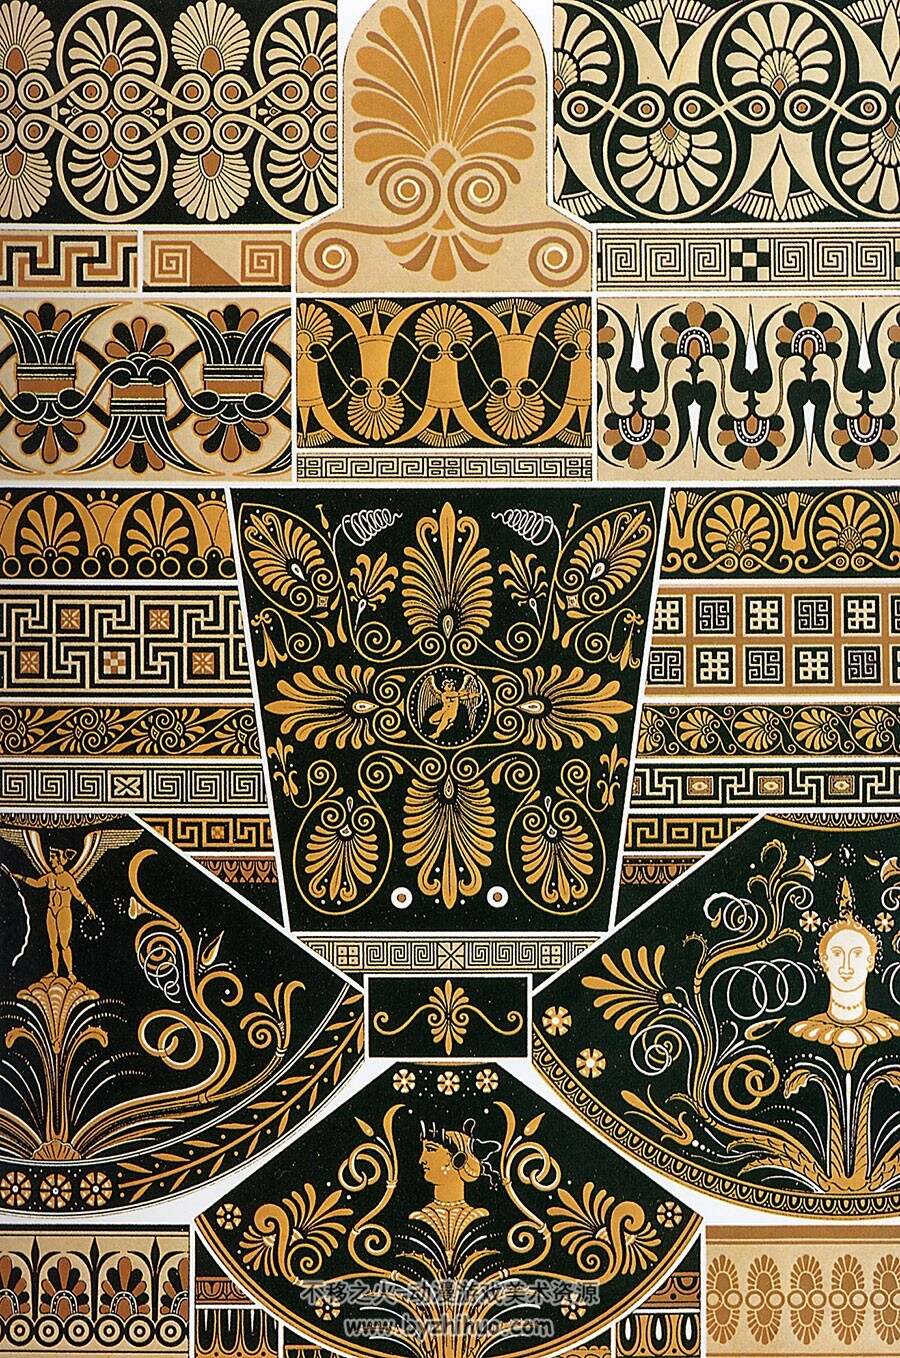 OPHAMEHT 中世纪文艺复兴时期装饰古典花纹图案